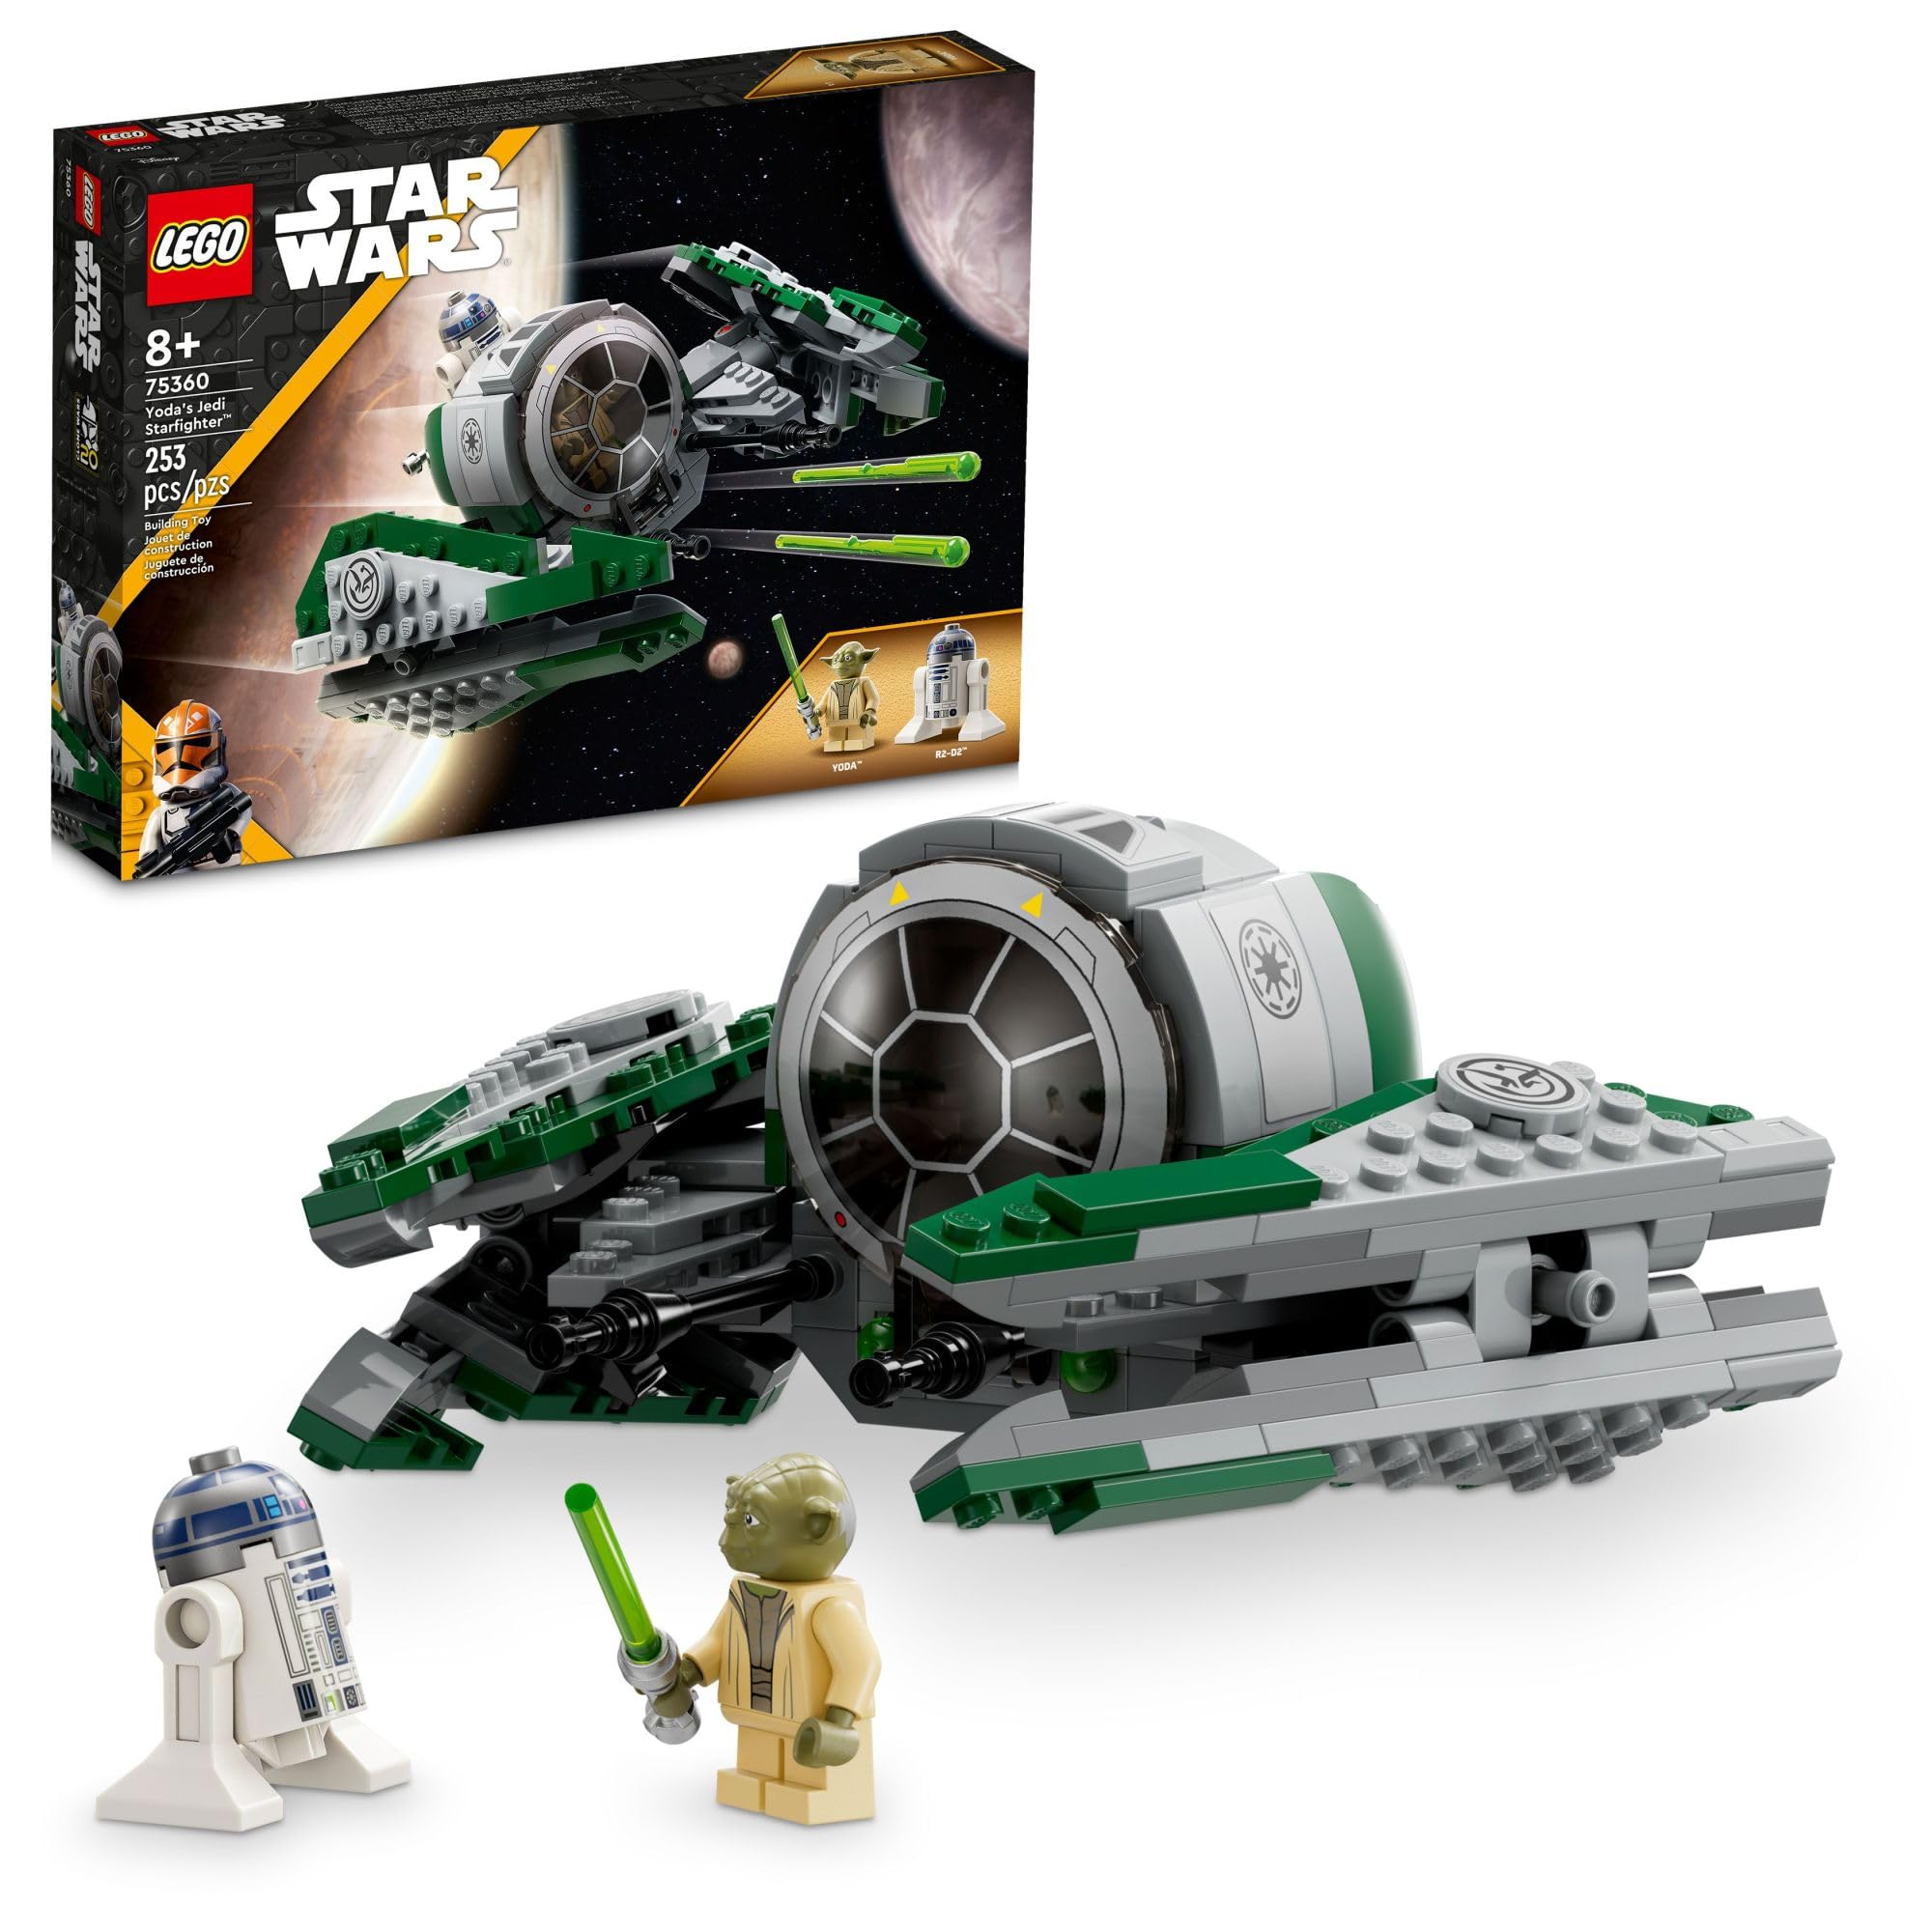 LEGO Star Wars: The Clone Wars Yoda’s Jedi Starfighter (75360) w/ Master Yoda Minifigure & R2-D2 Droid Minifigure $28 + Free Shipping w/ Prime or on $35+